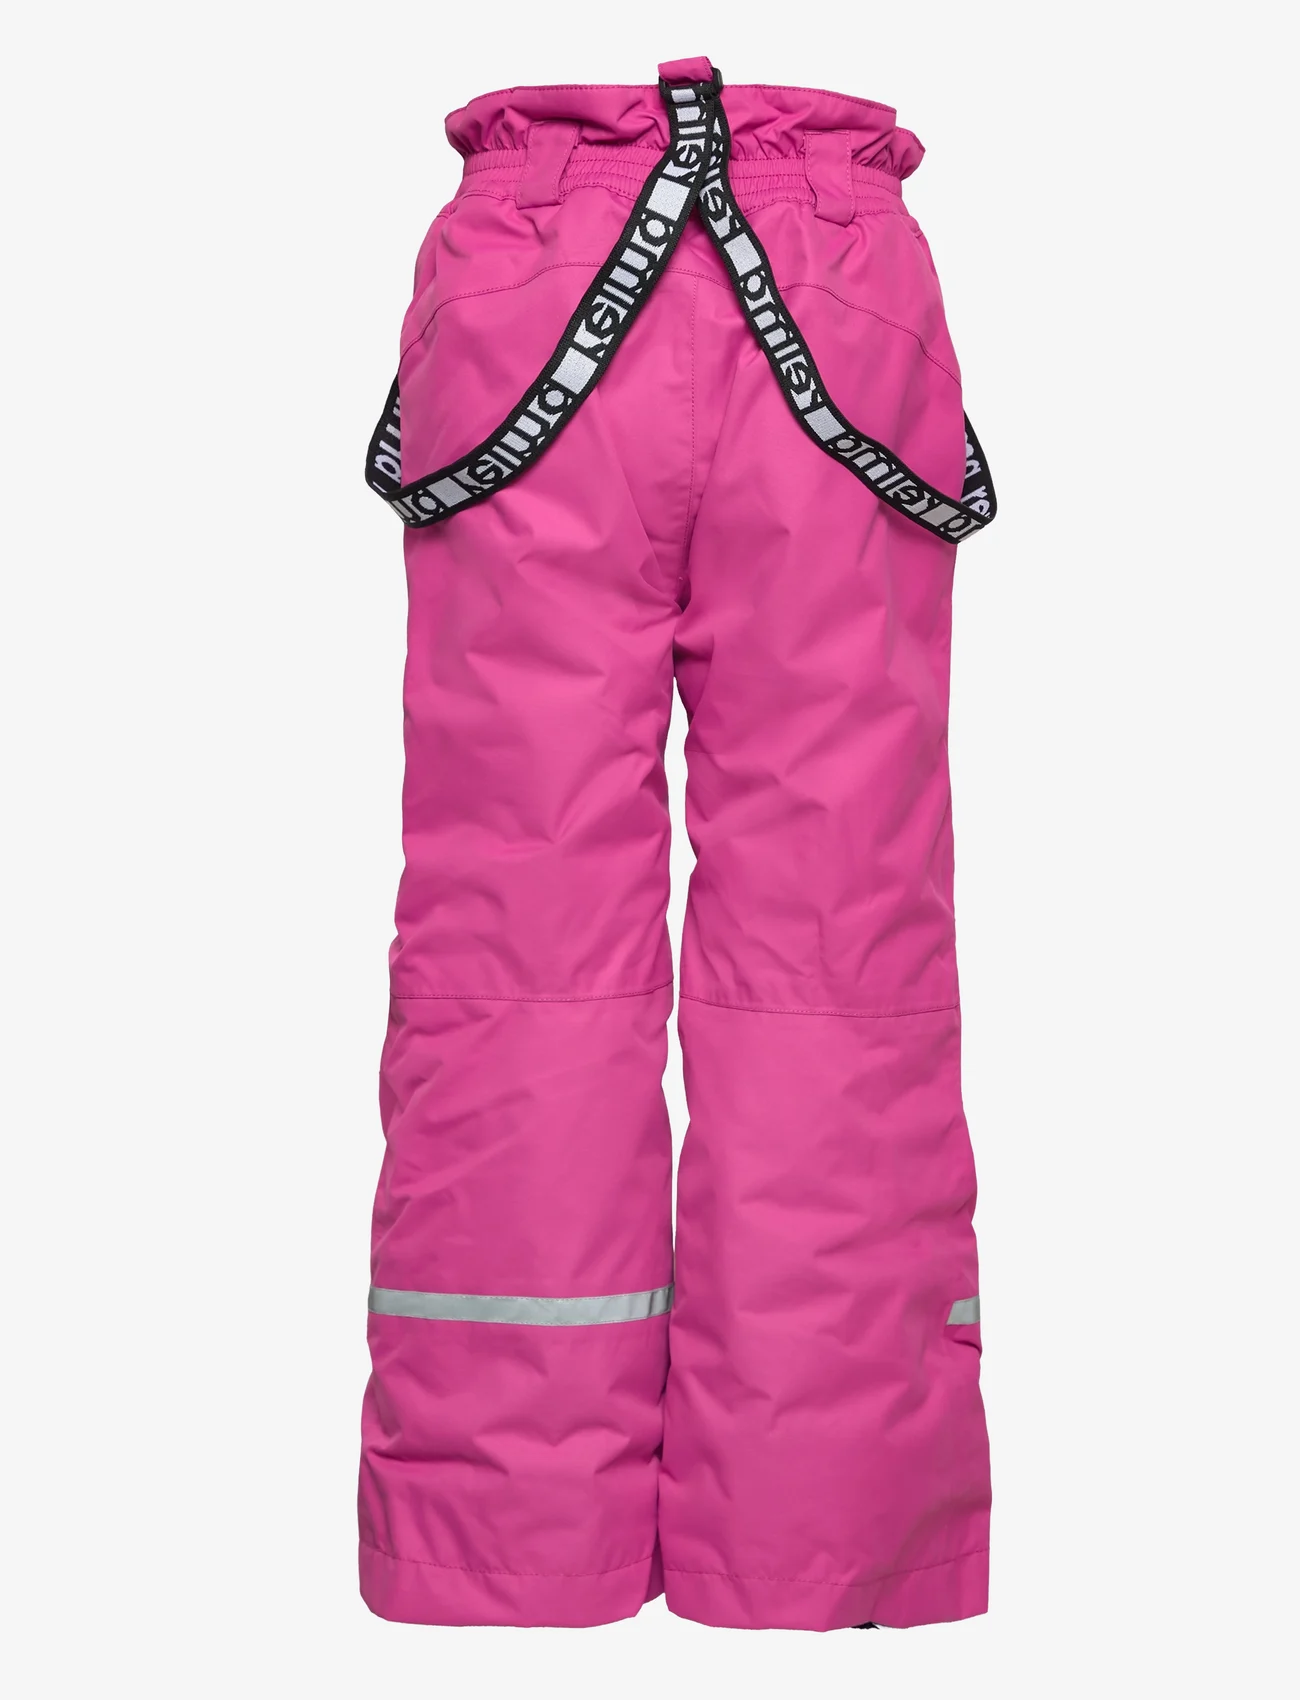 Reima - Winter pants, Tuokio - friluftsbyxor - magenta purple - 1